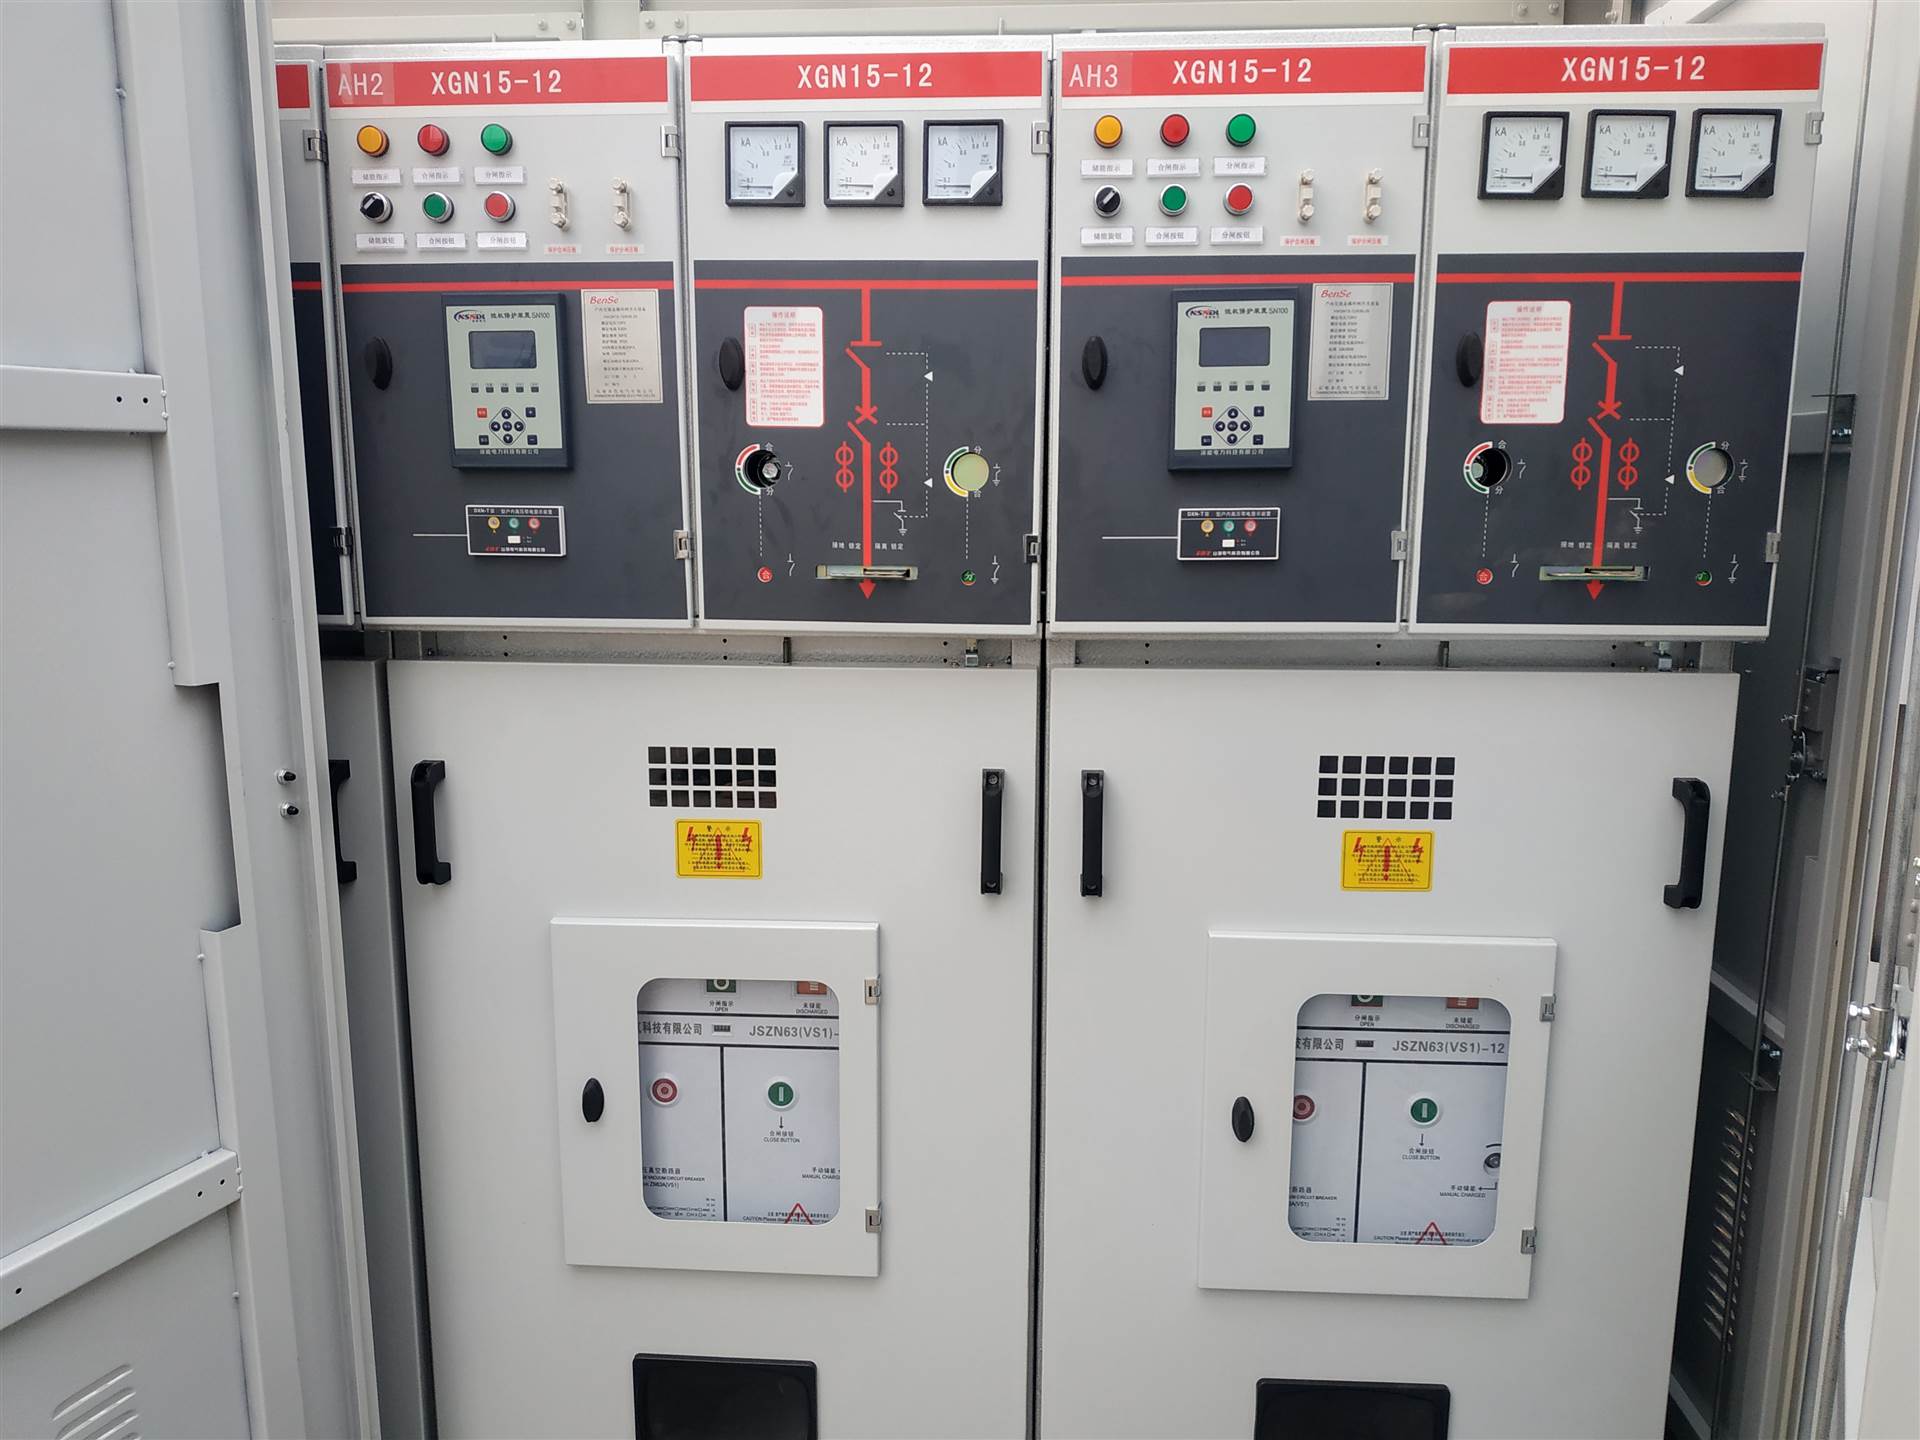 xgn15-12高压开关柜设备倒闸操作